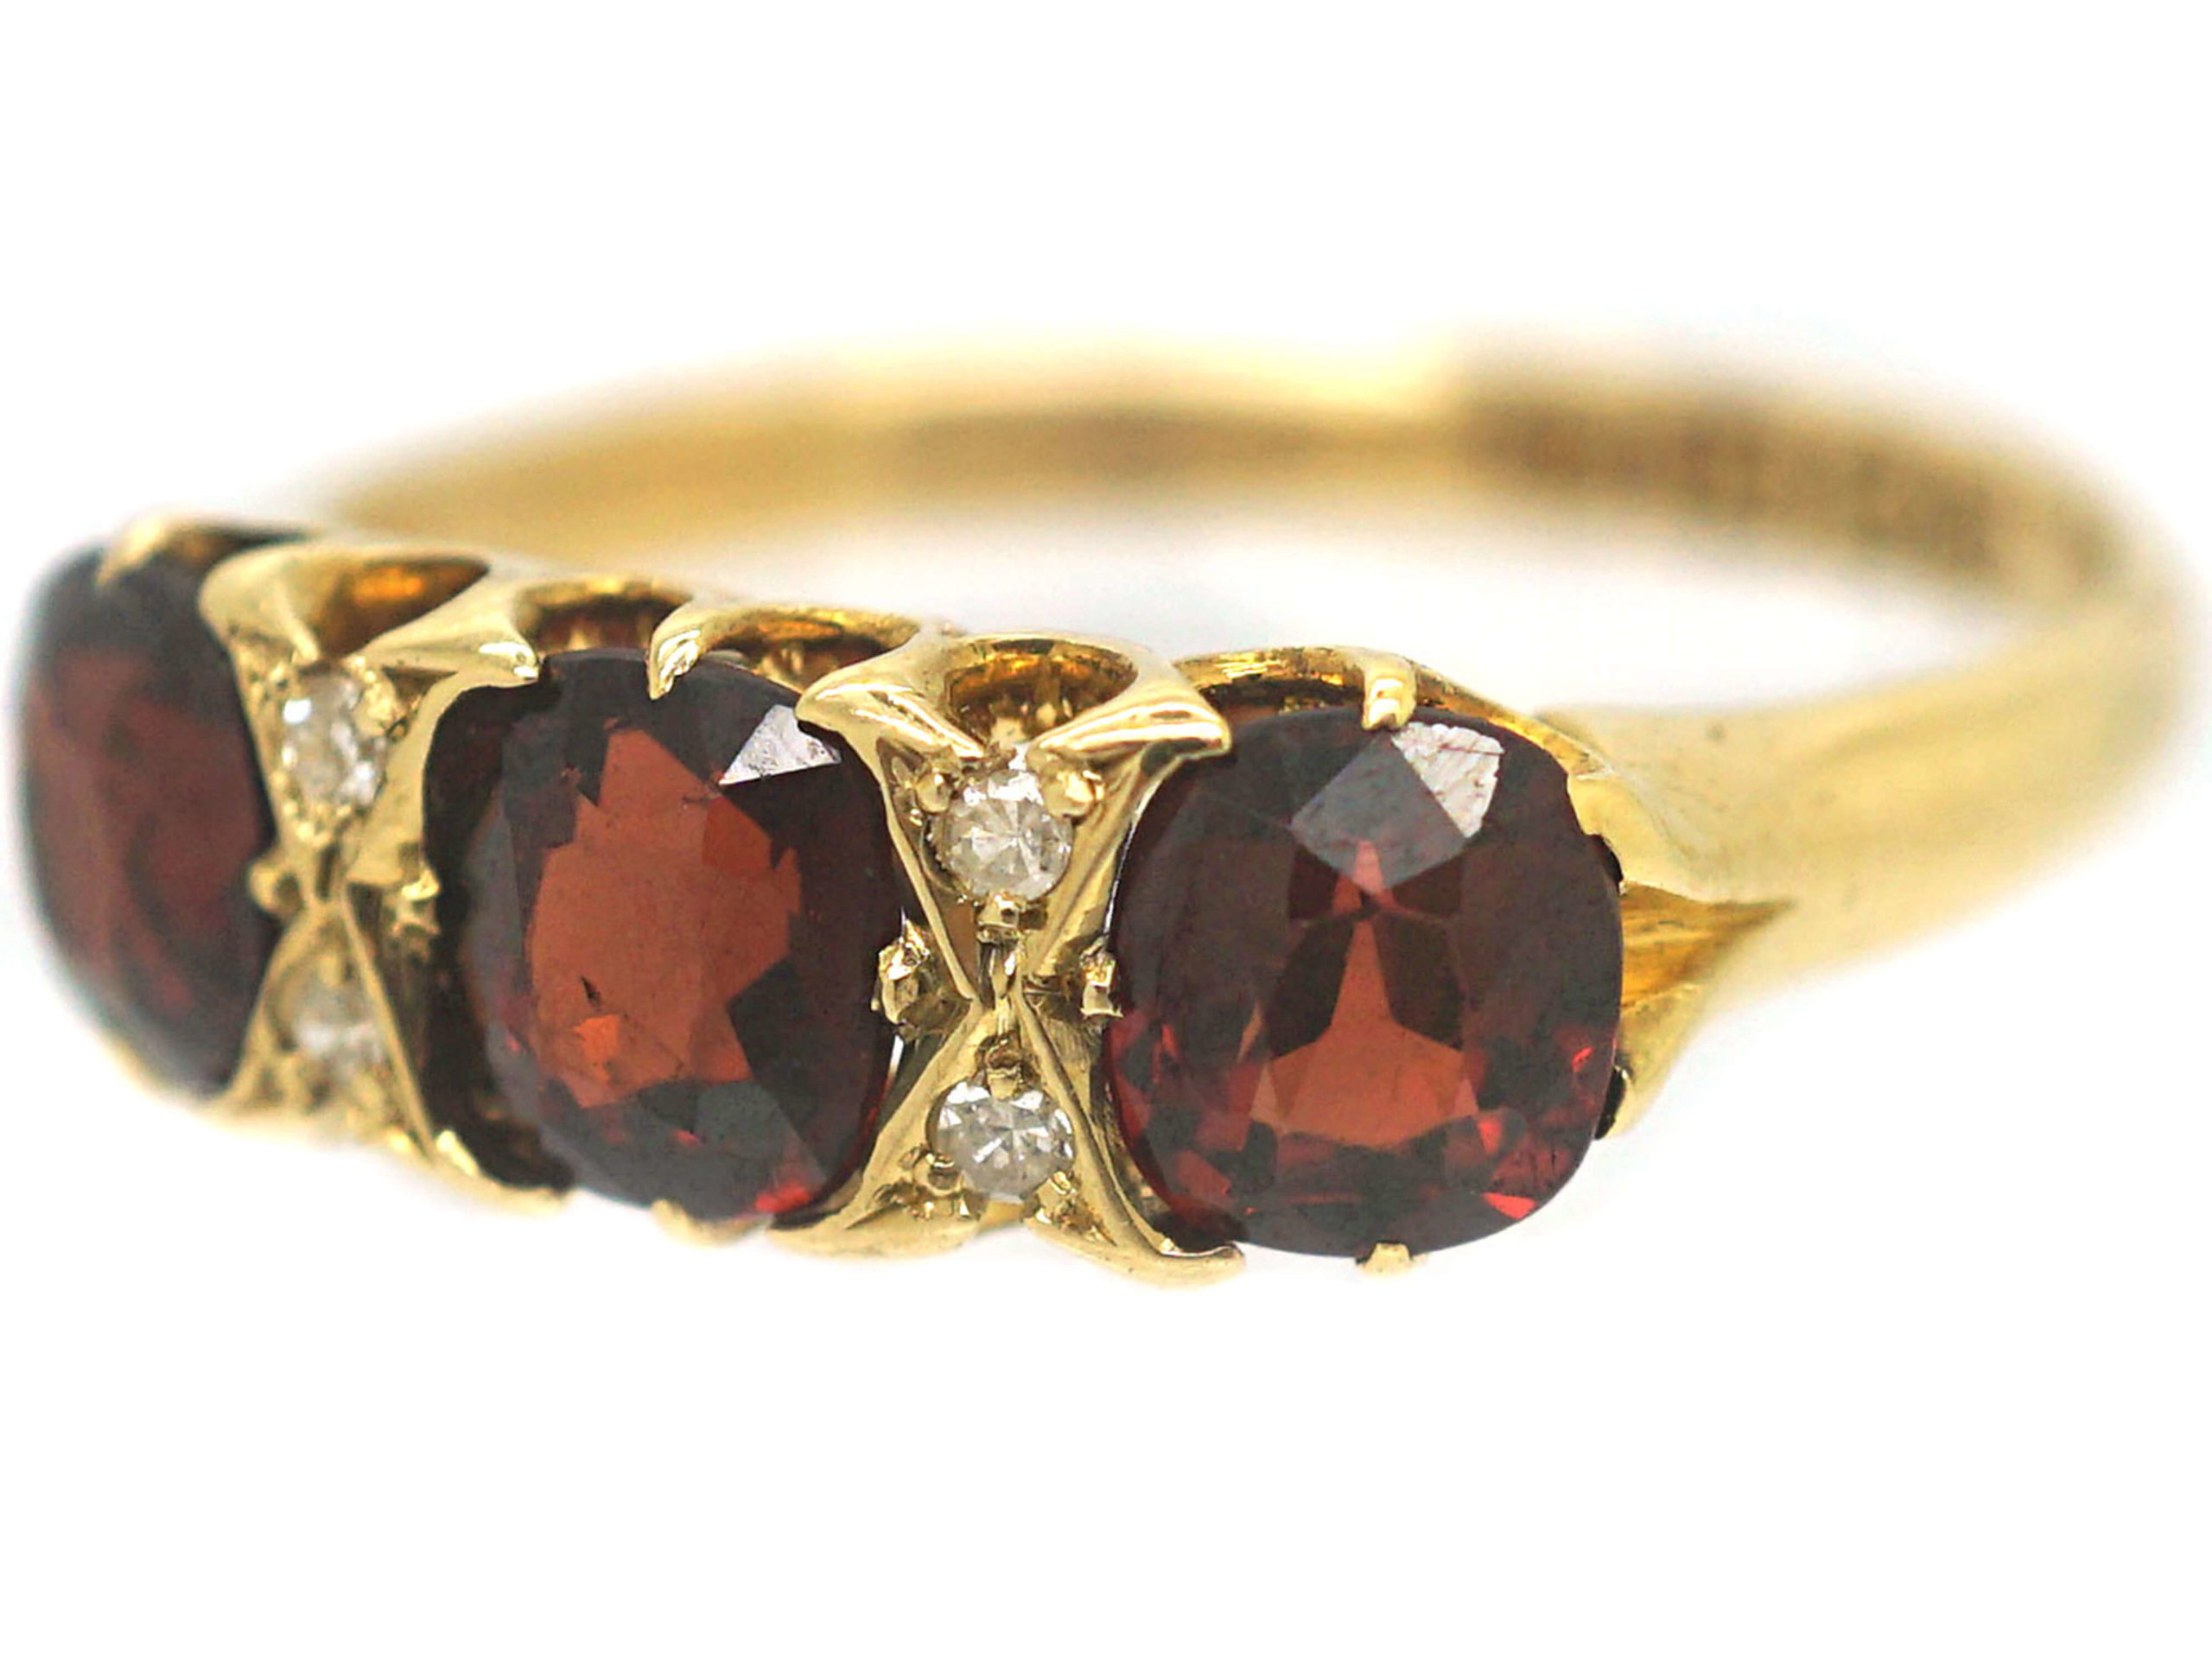 Edwardian 18ct Gold Three Stone Garnet And Diamond Ring 448p The